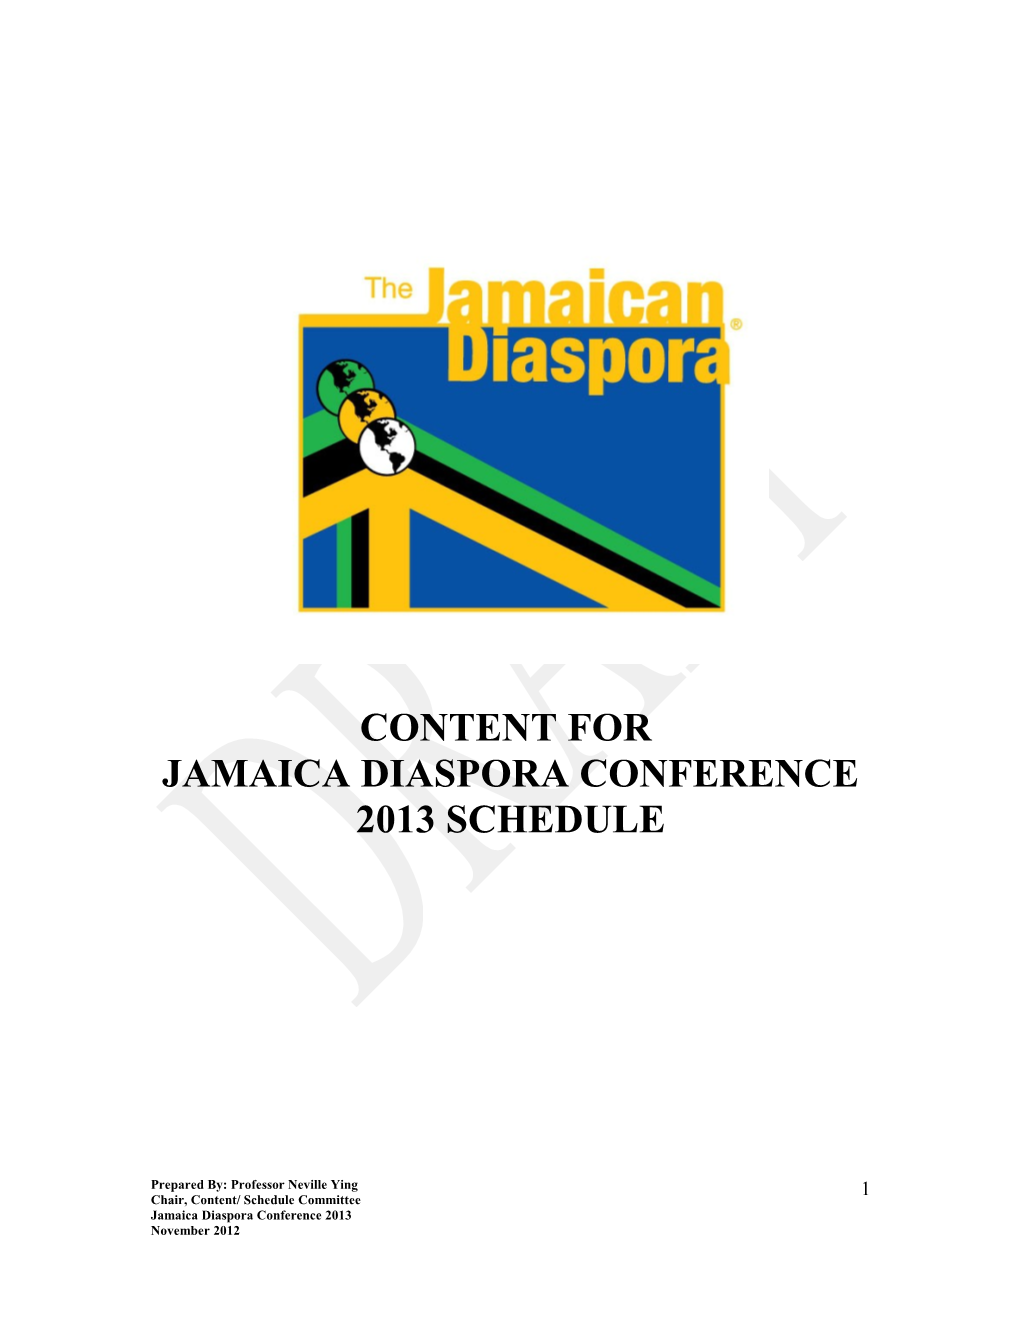 Diaspora Conference 2013 Content for Schedule